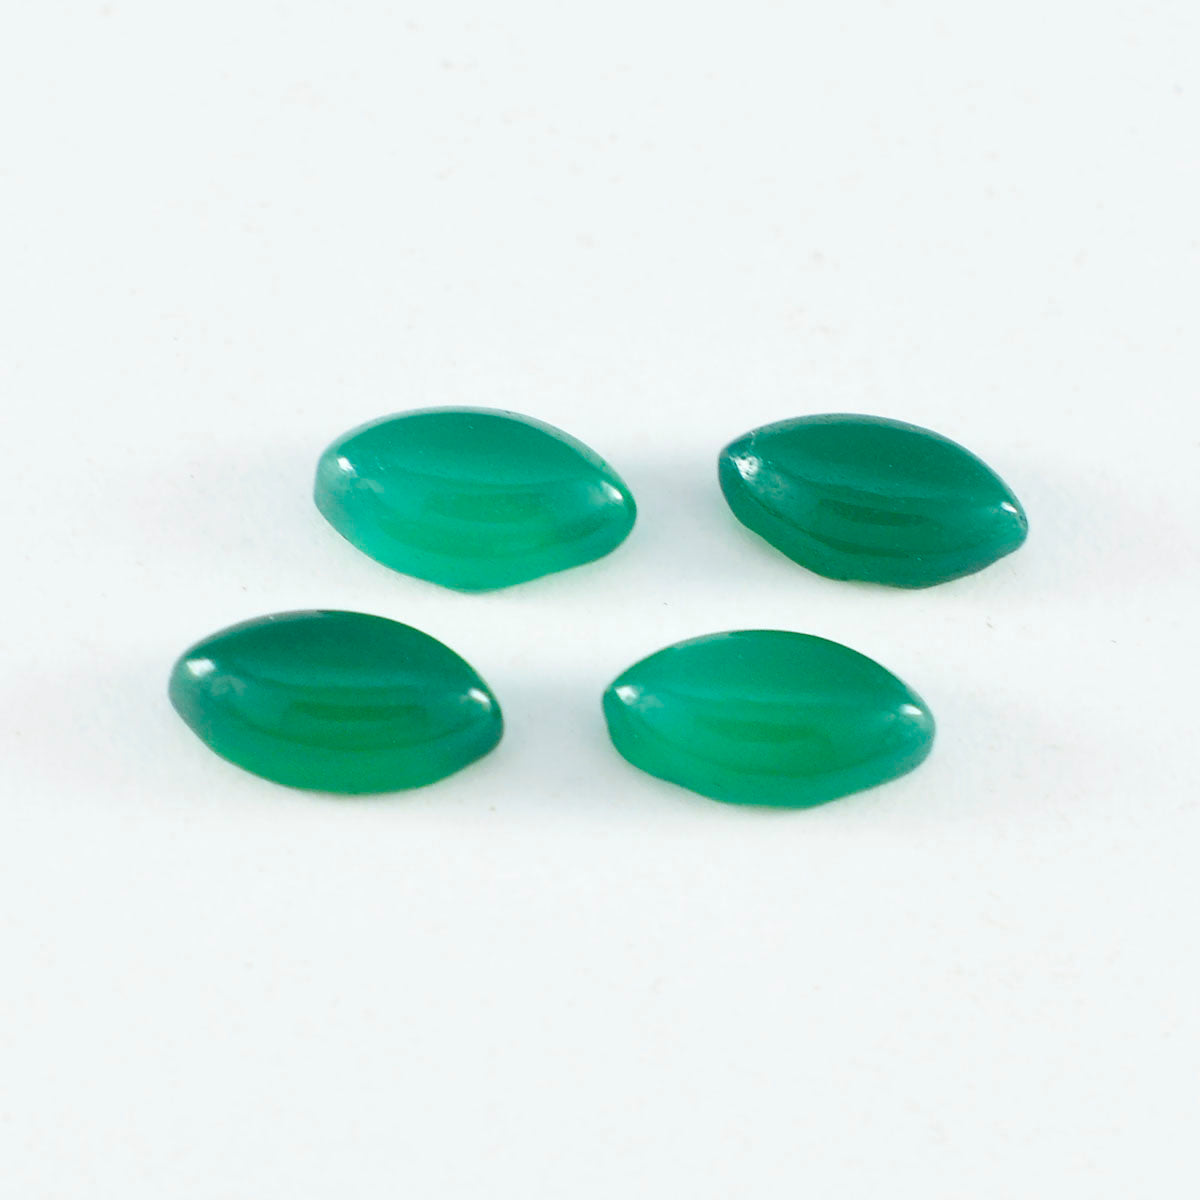 Riyogems 1PC Green Onyx Cabochon 8x16 mm Marquise Shape A+ Quality Loose Gems